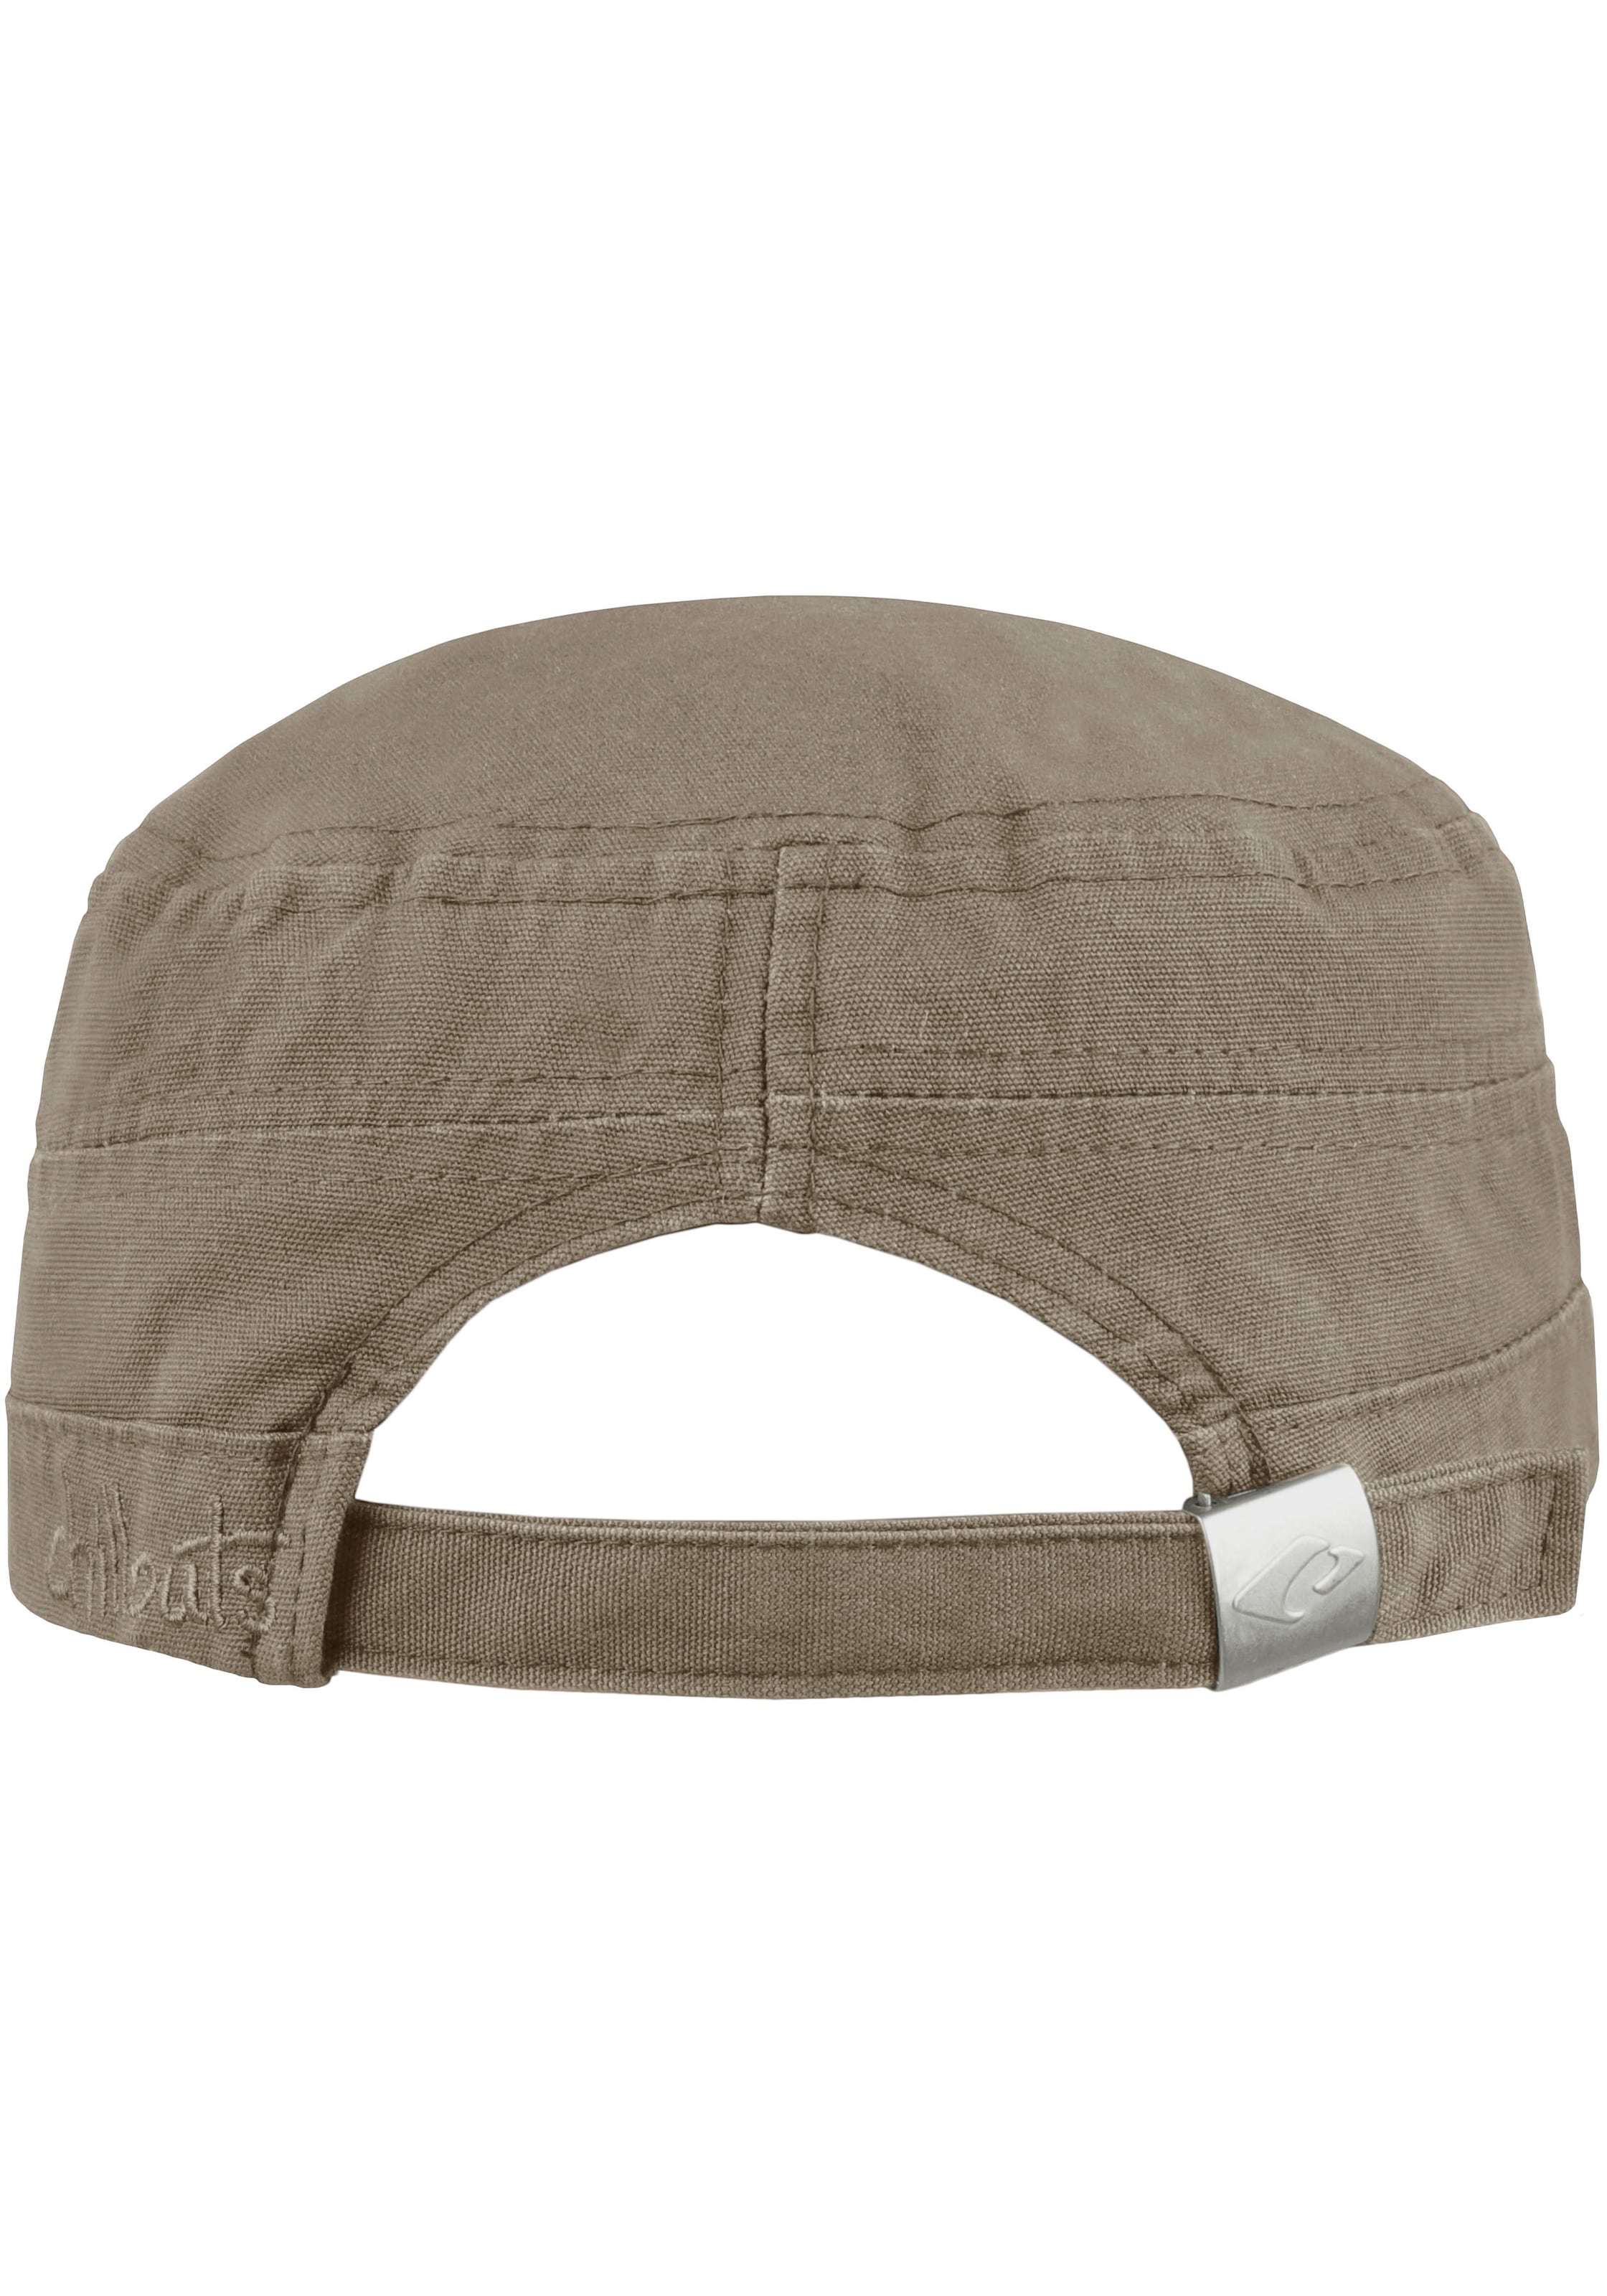 »El Paso Army Cap bei chillouts Hat«